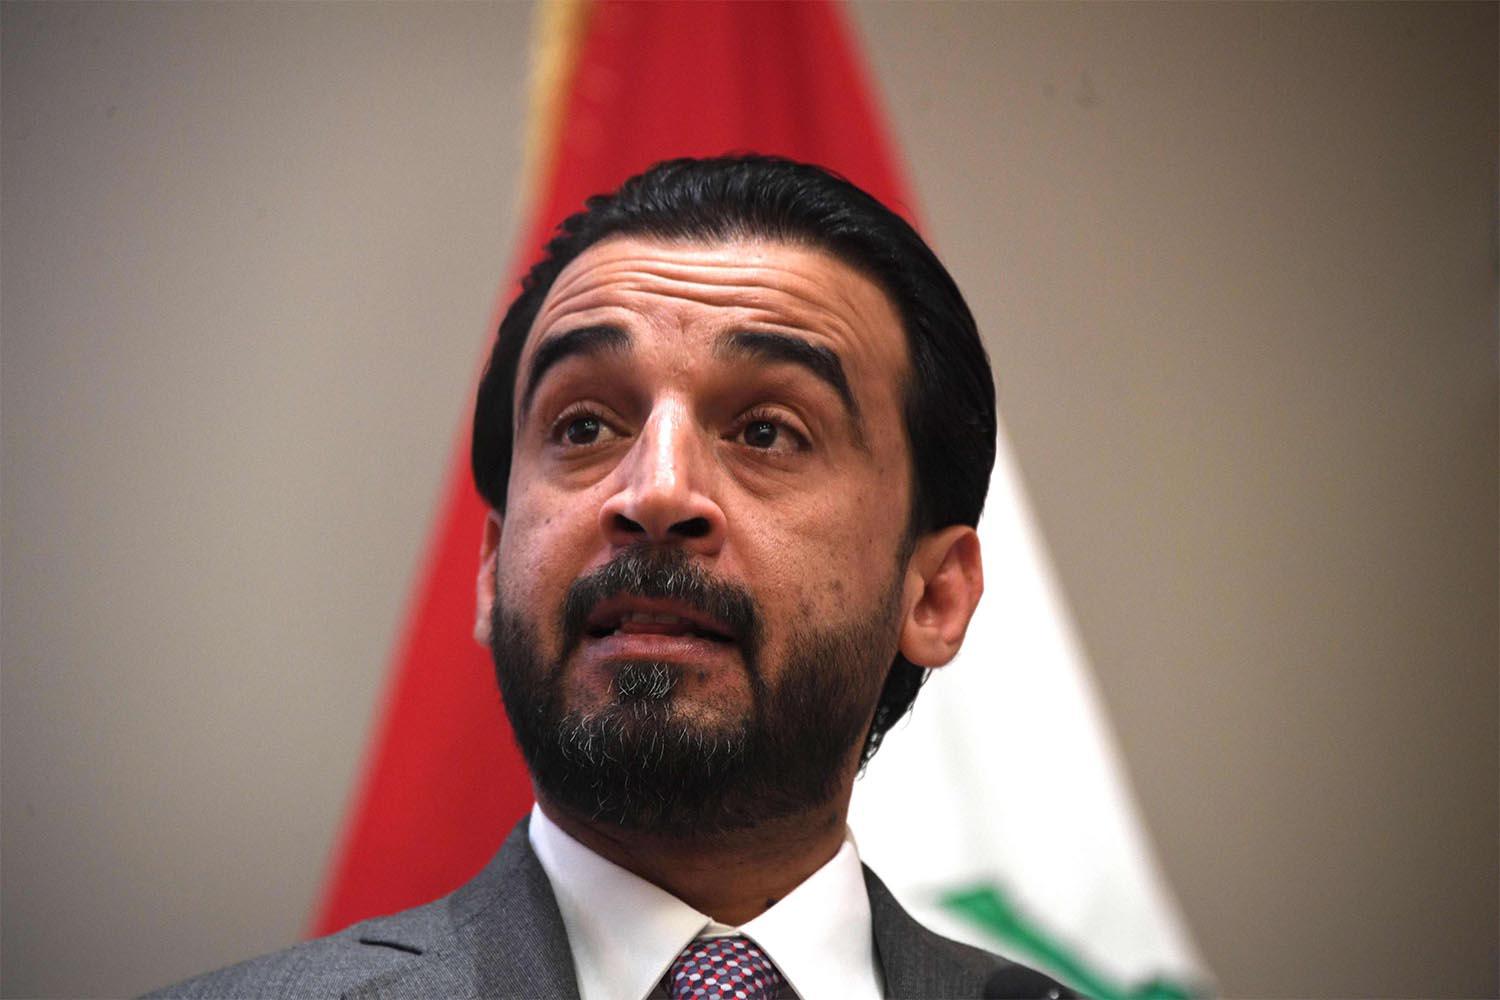 Iraq's parliament speaker Mohammed Halbousi